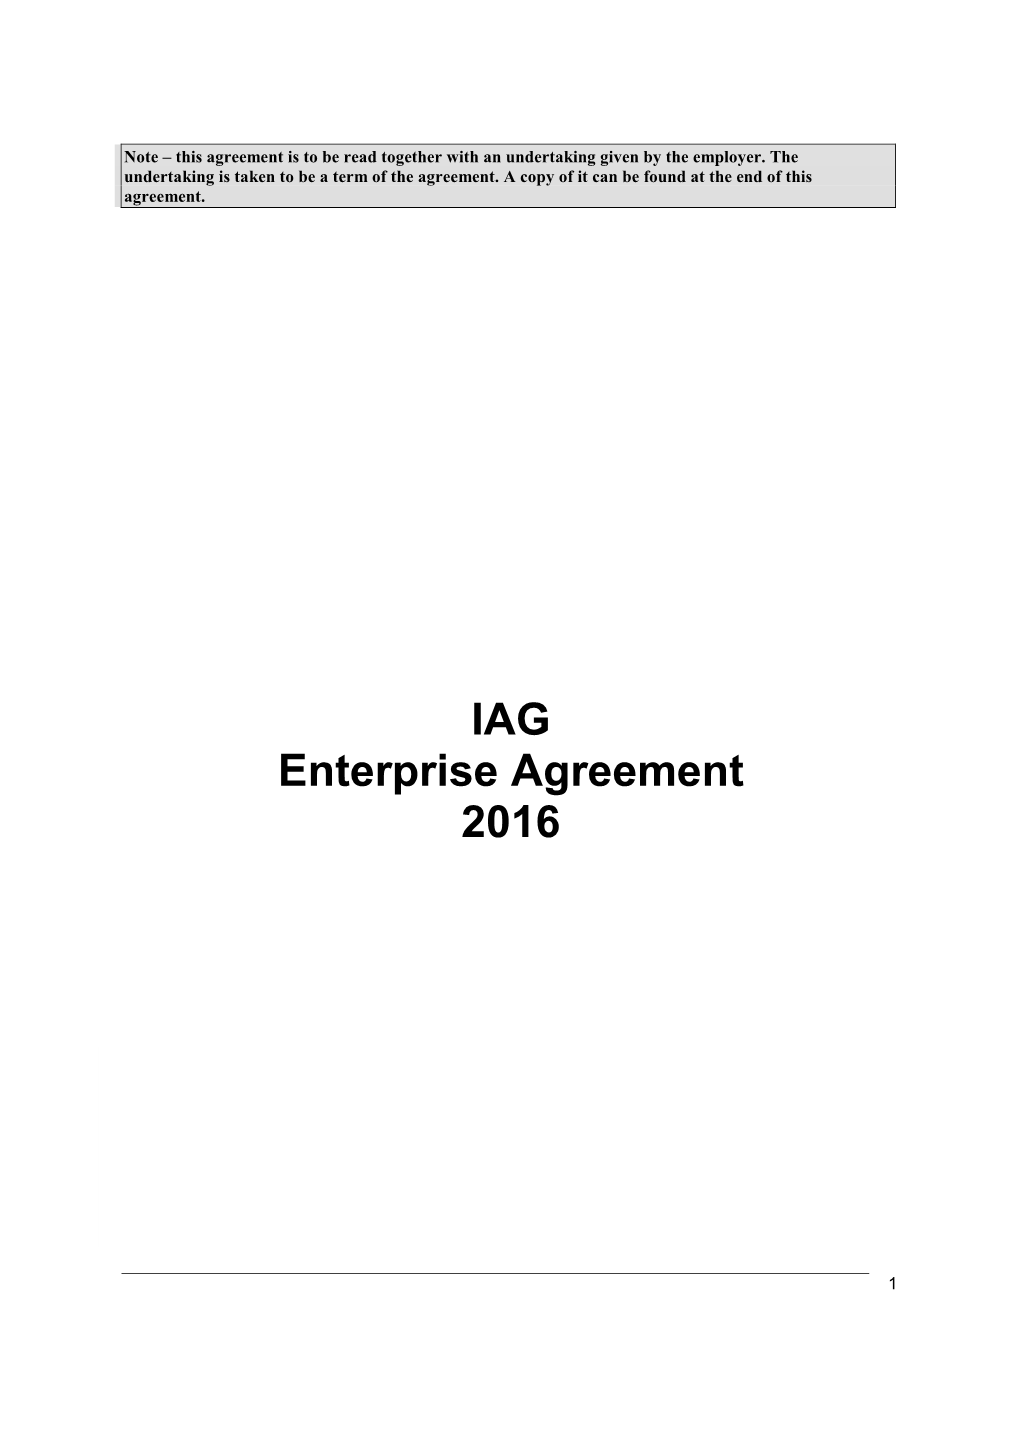 IAG Enterprise Agreement 2016